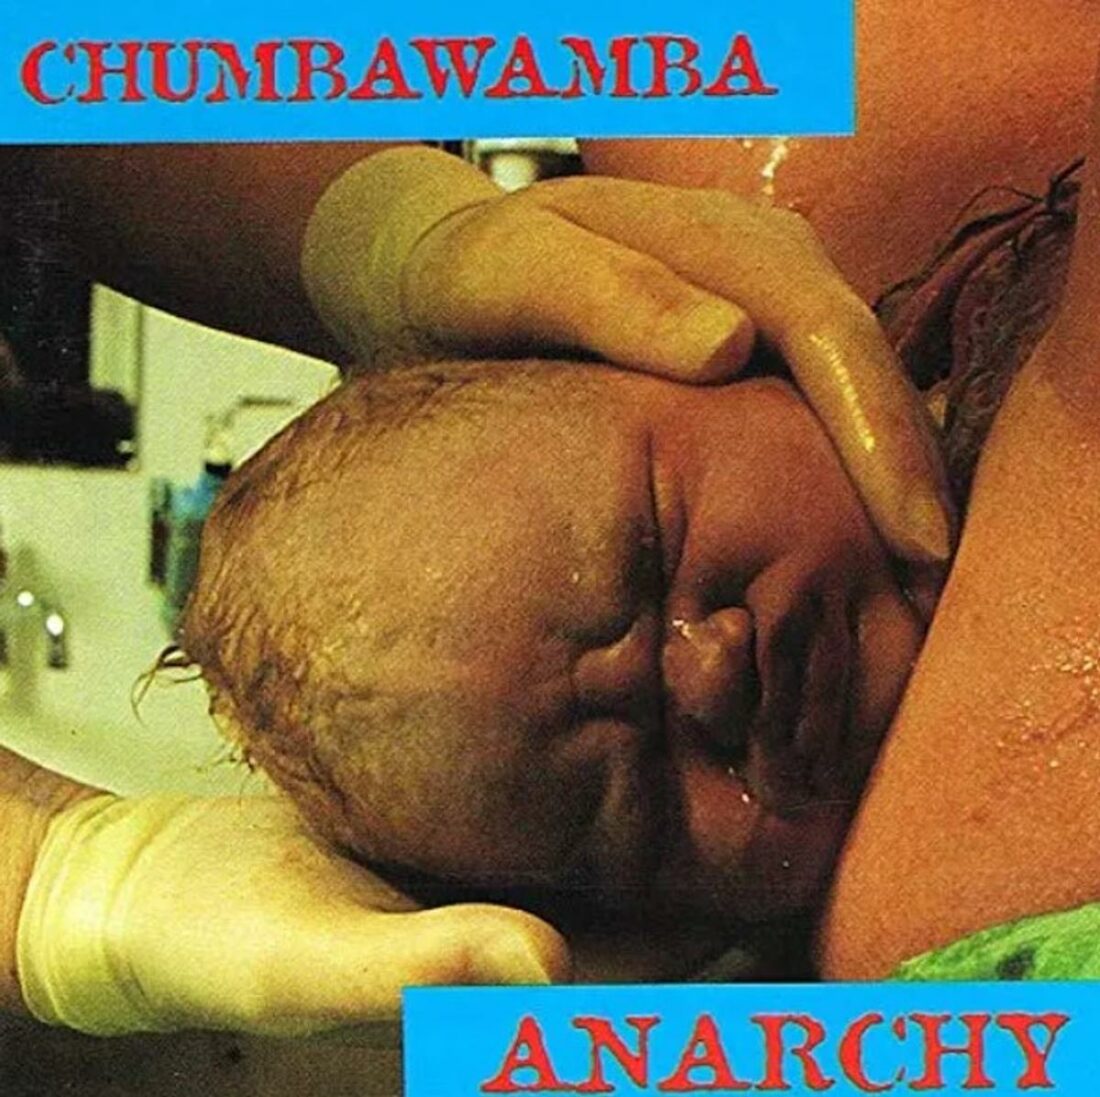 Chumbawamba, Anarchy (From: Amazon)